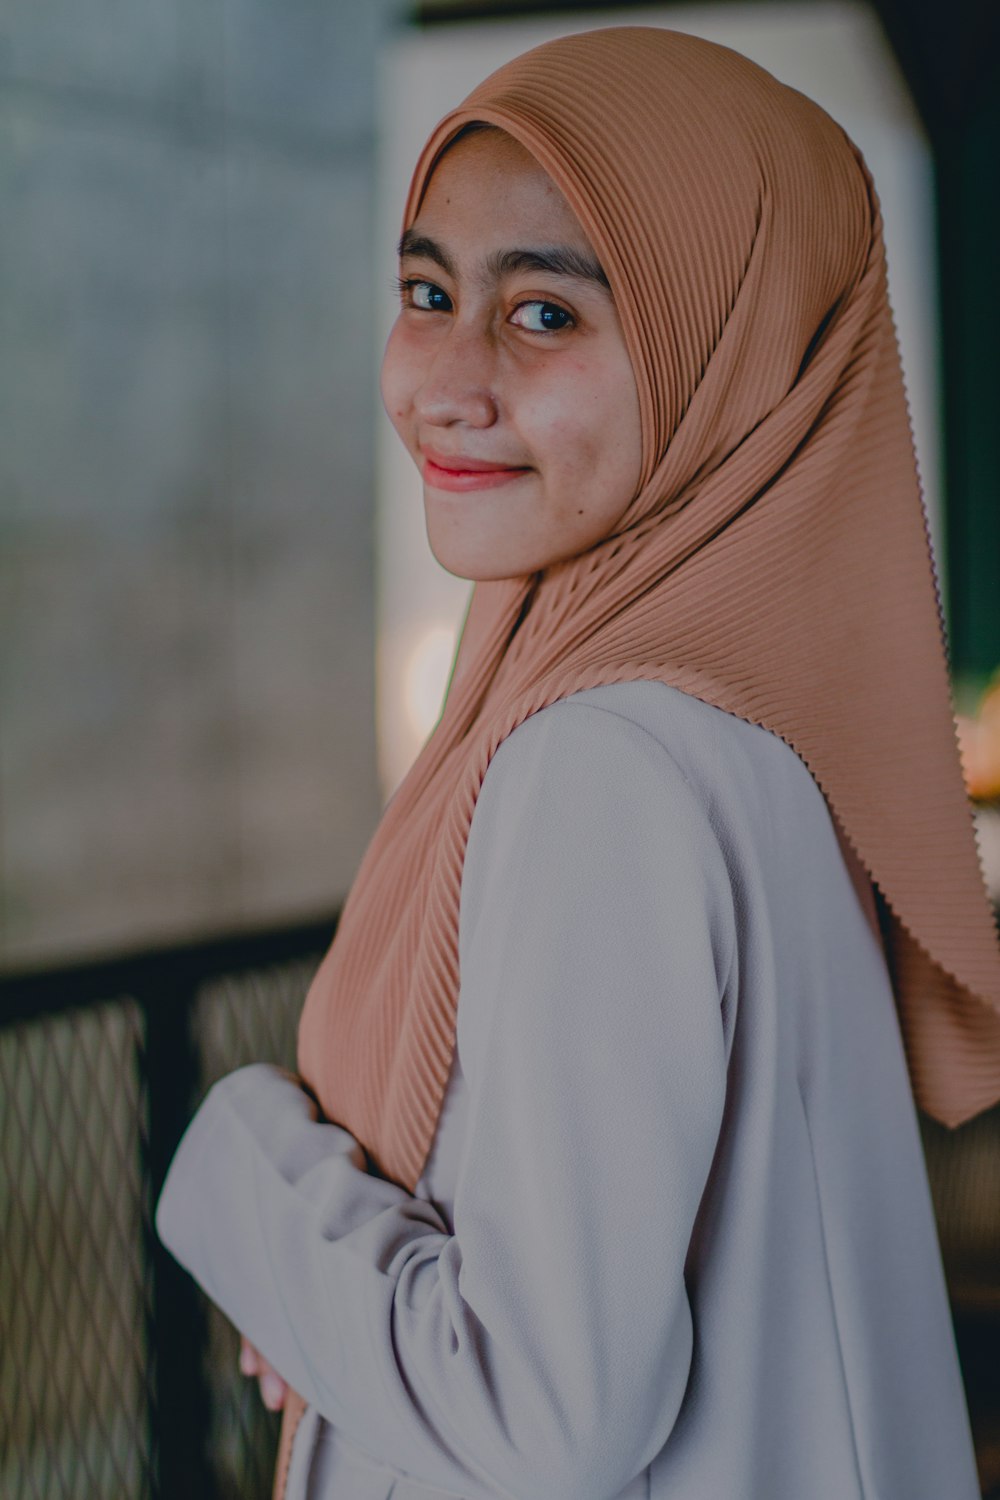 woman in brown hijab smiling